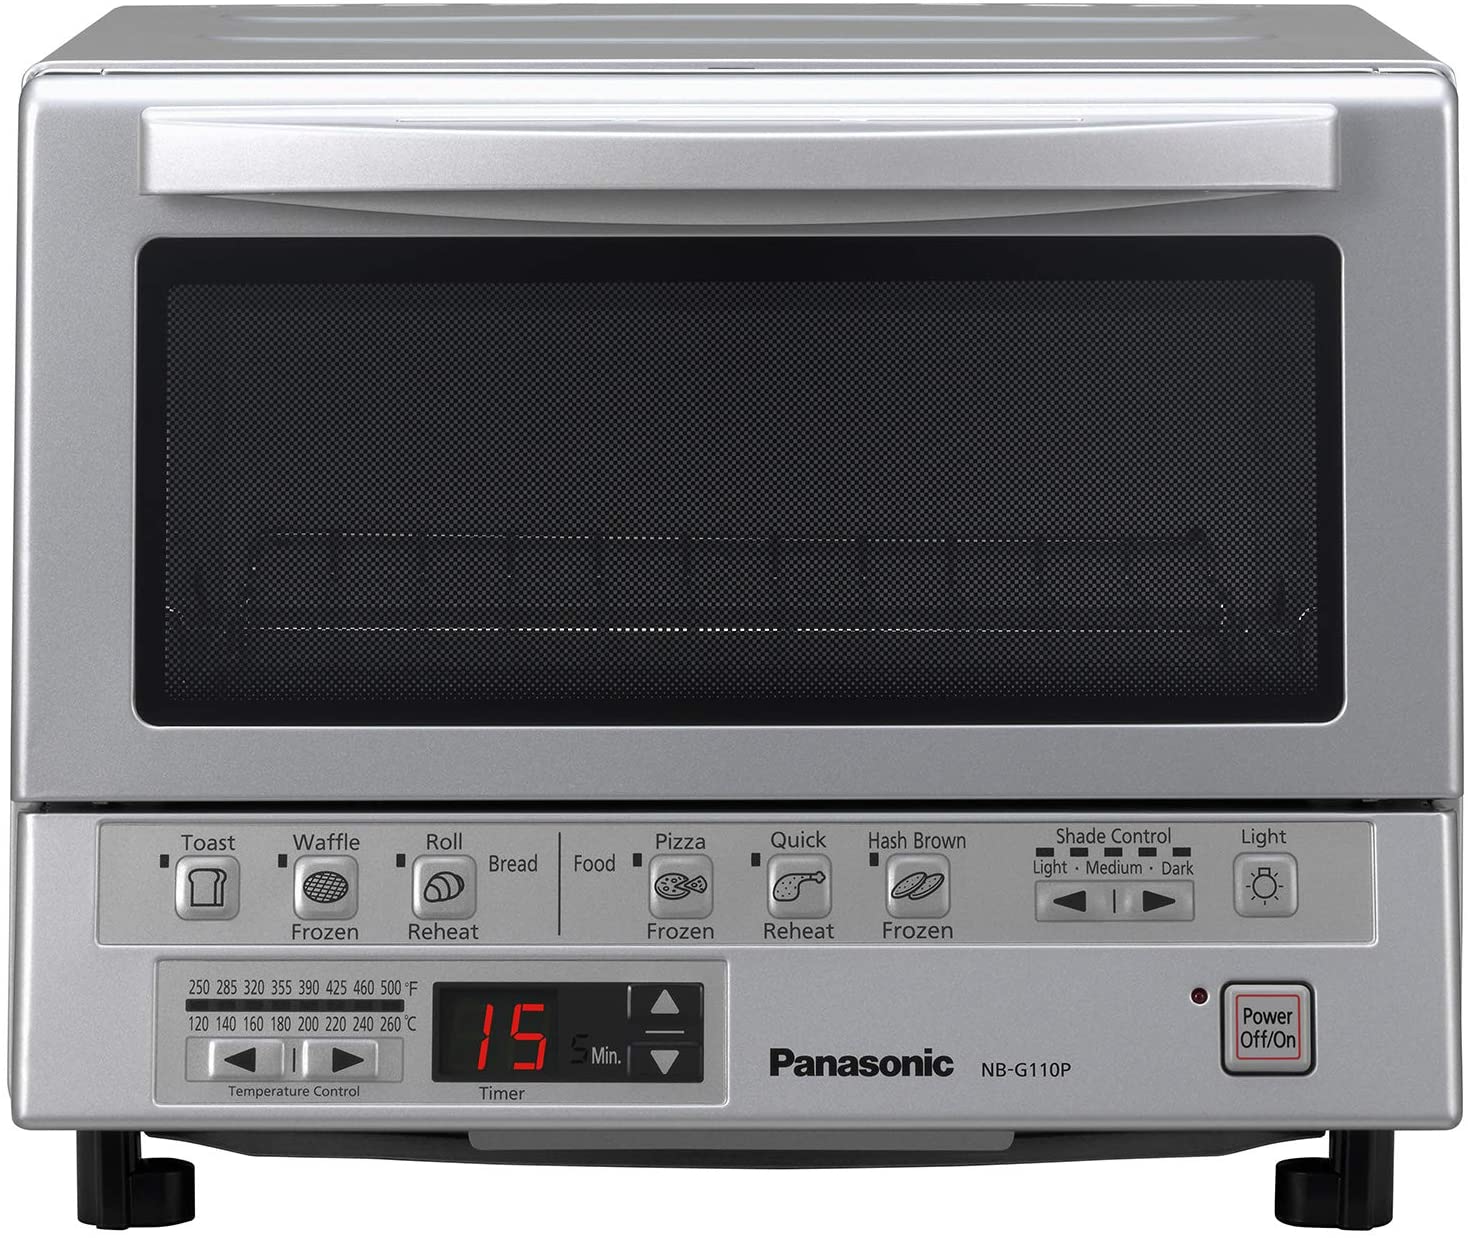 7. Panasonic FlashXpress Toaster Oven